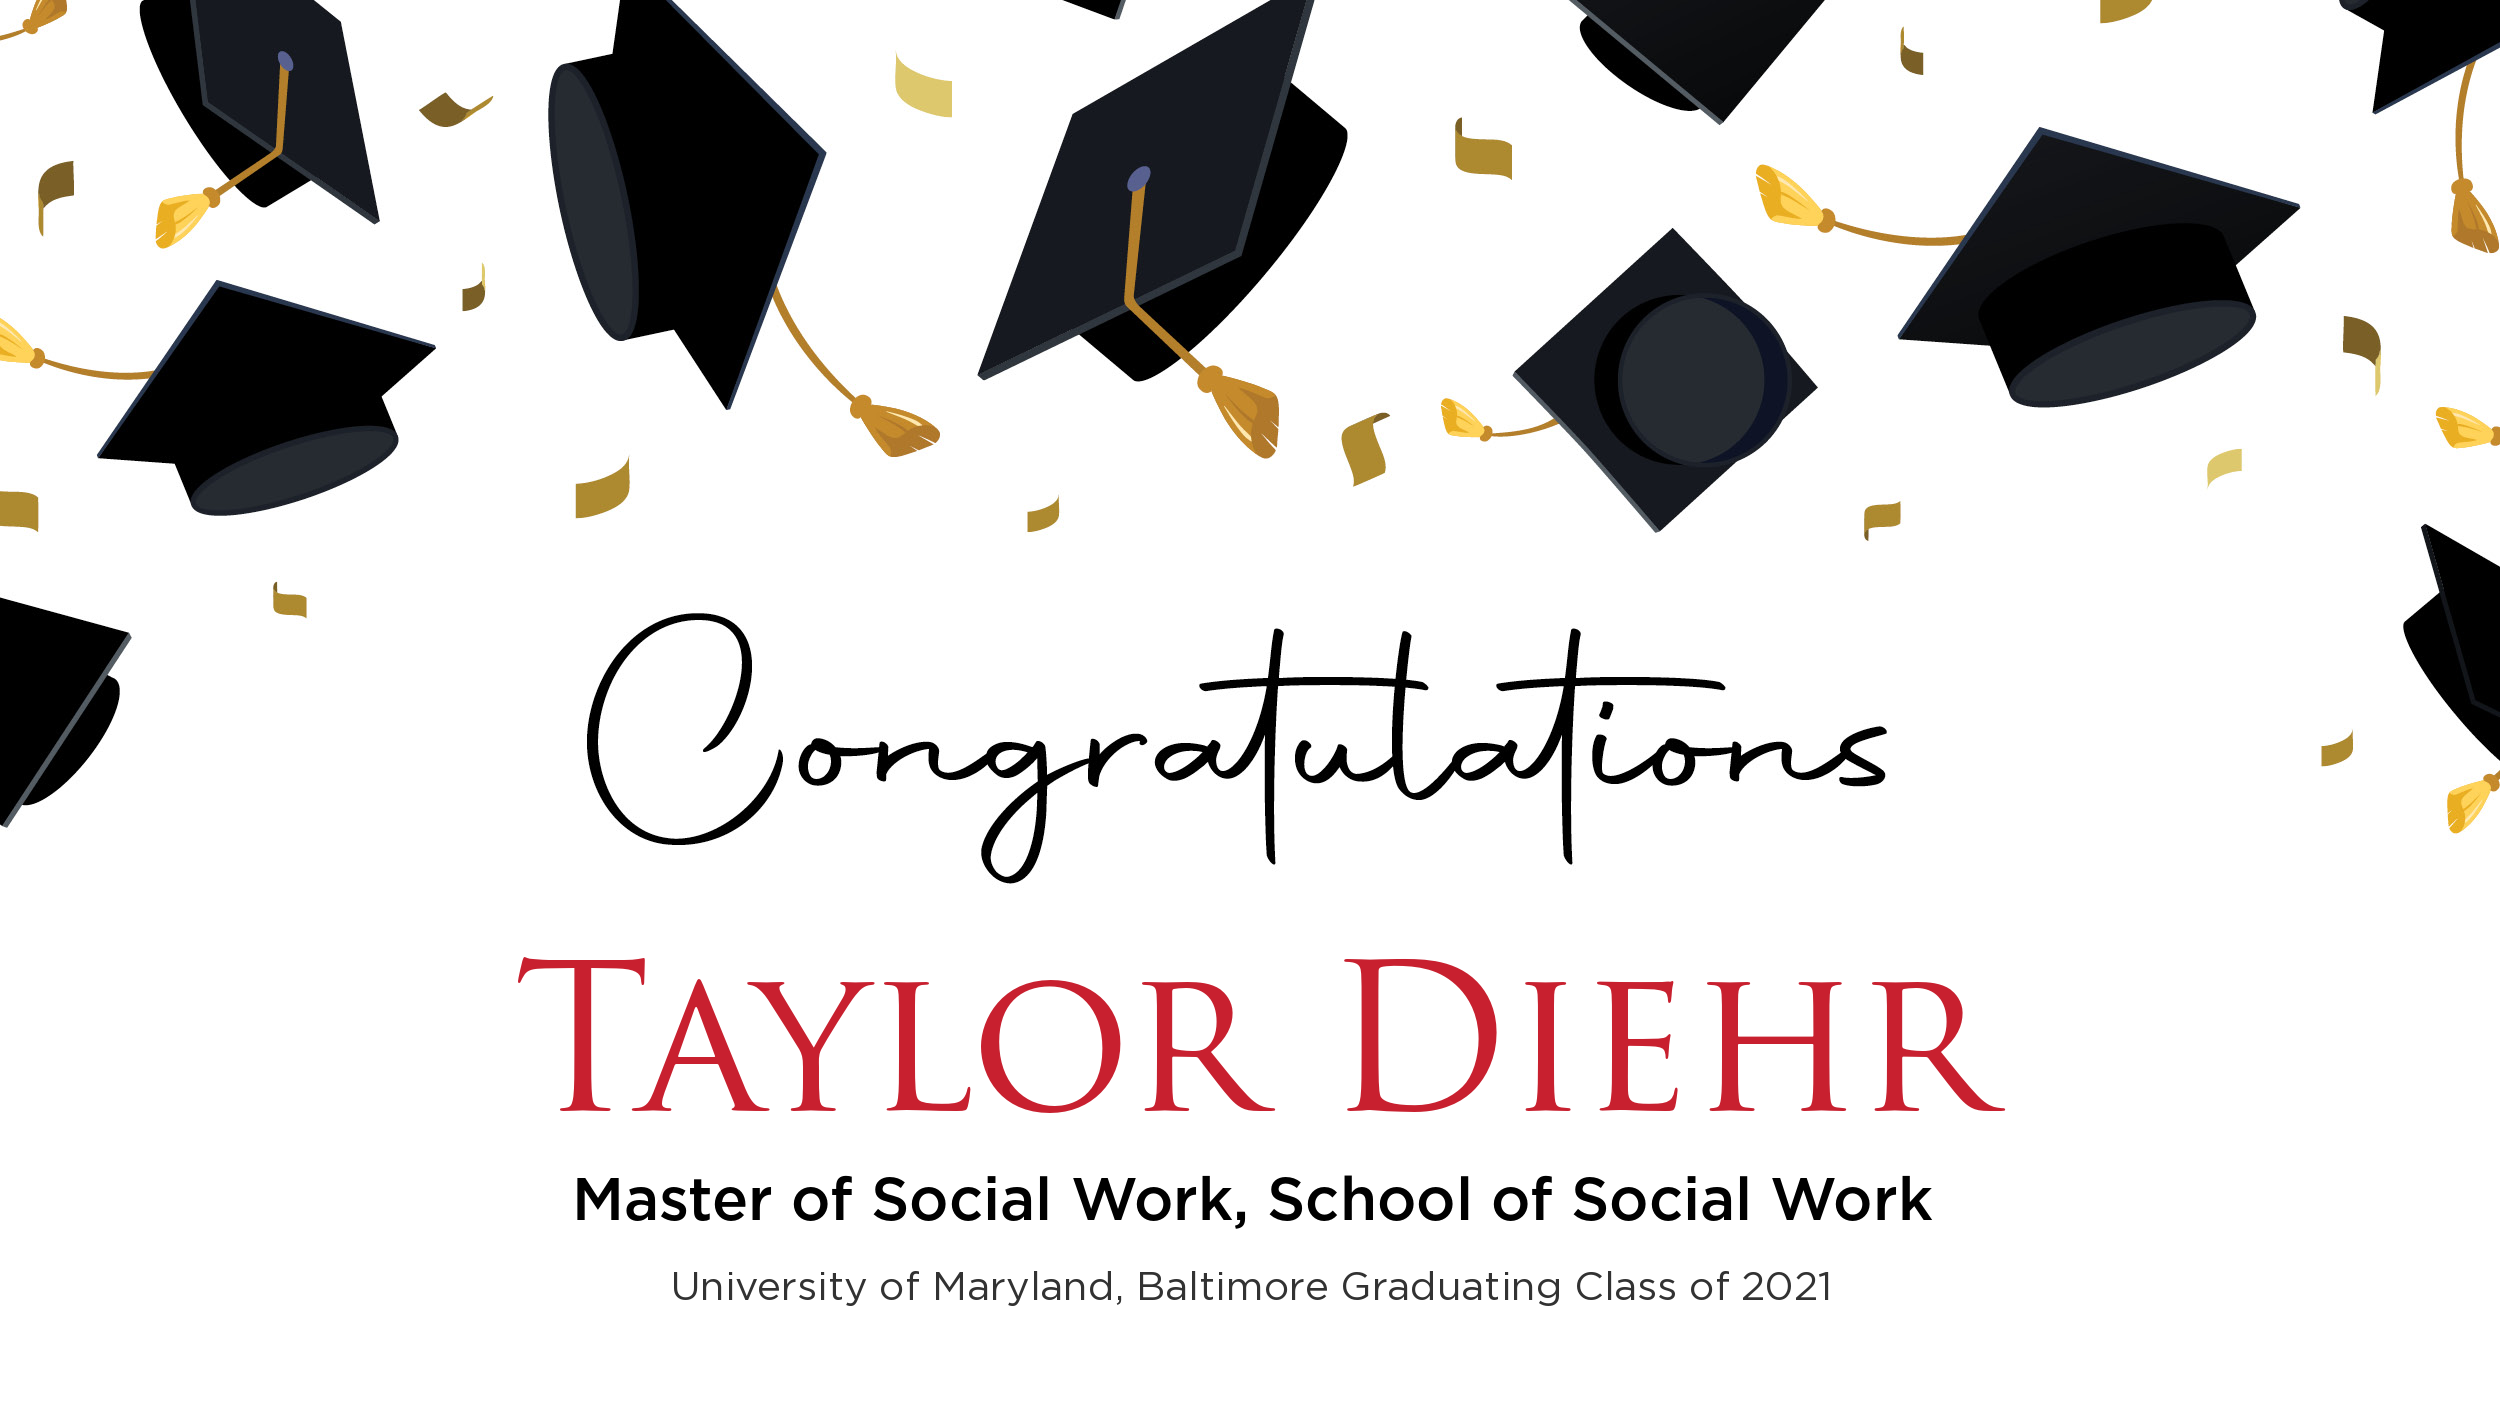 Congratulations Taylor Diehr, Master of Social Work